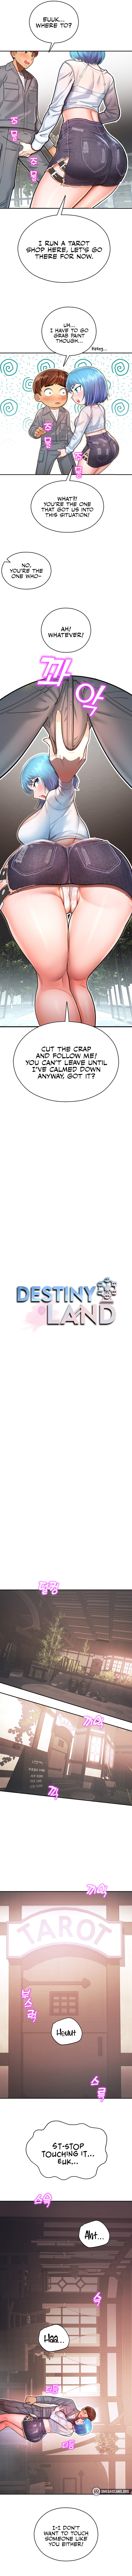 Destiny Land NEW image